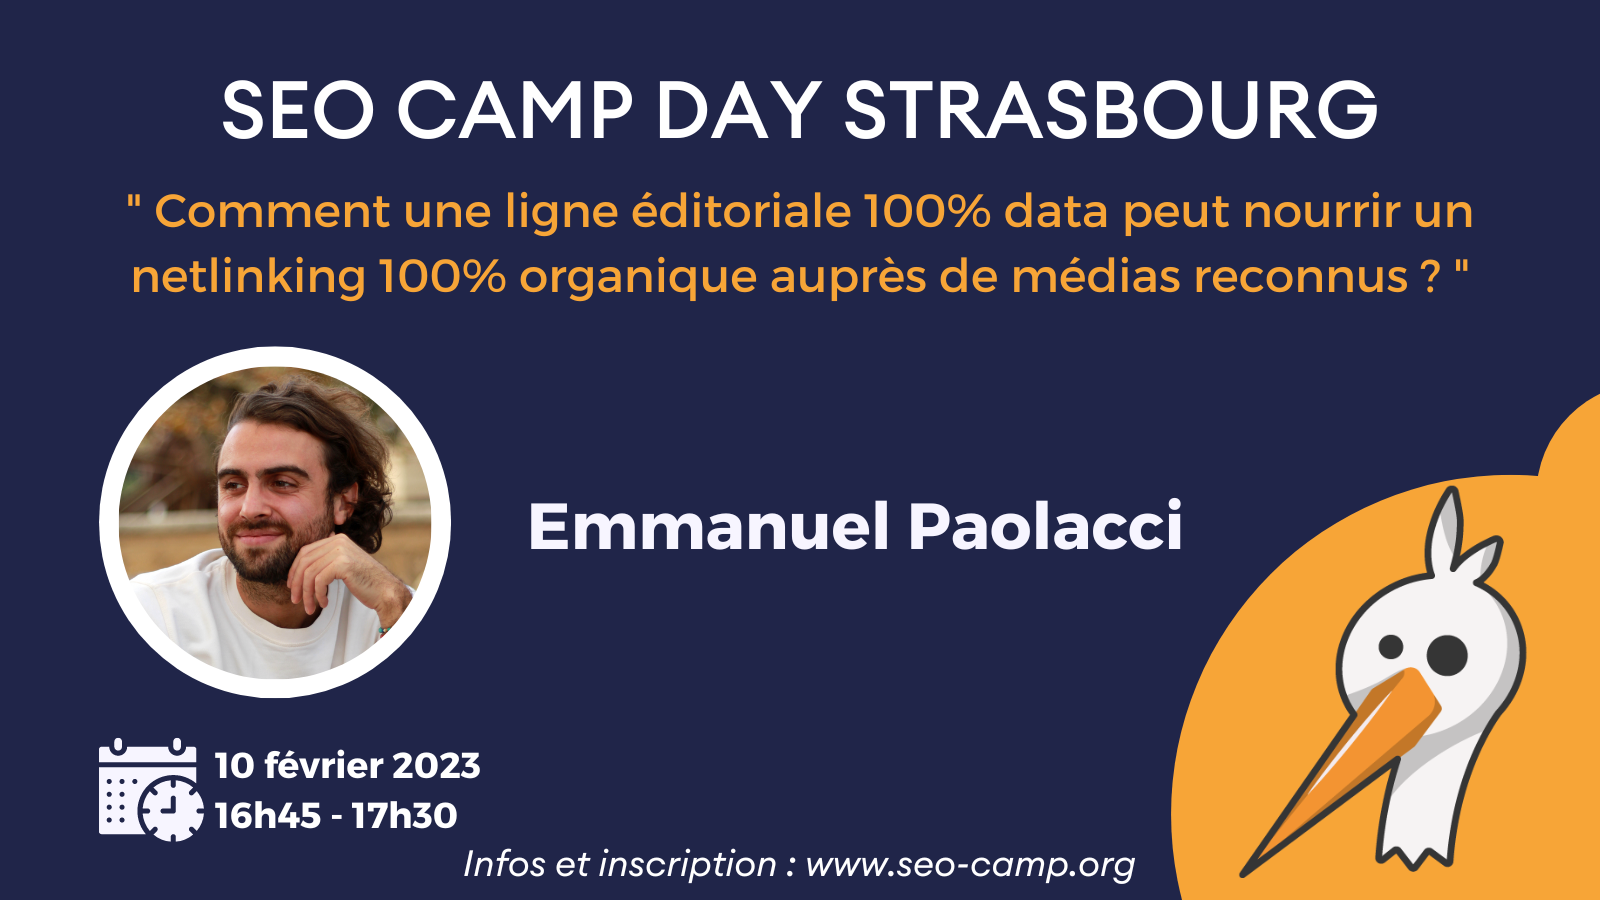 emmanuel paolacci seo camp day strasbourg 2023